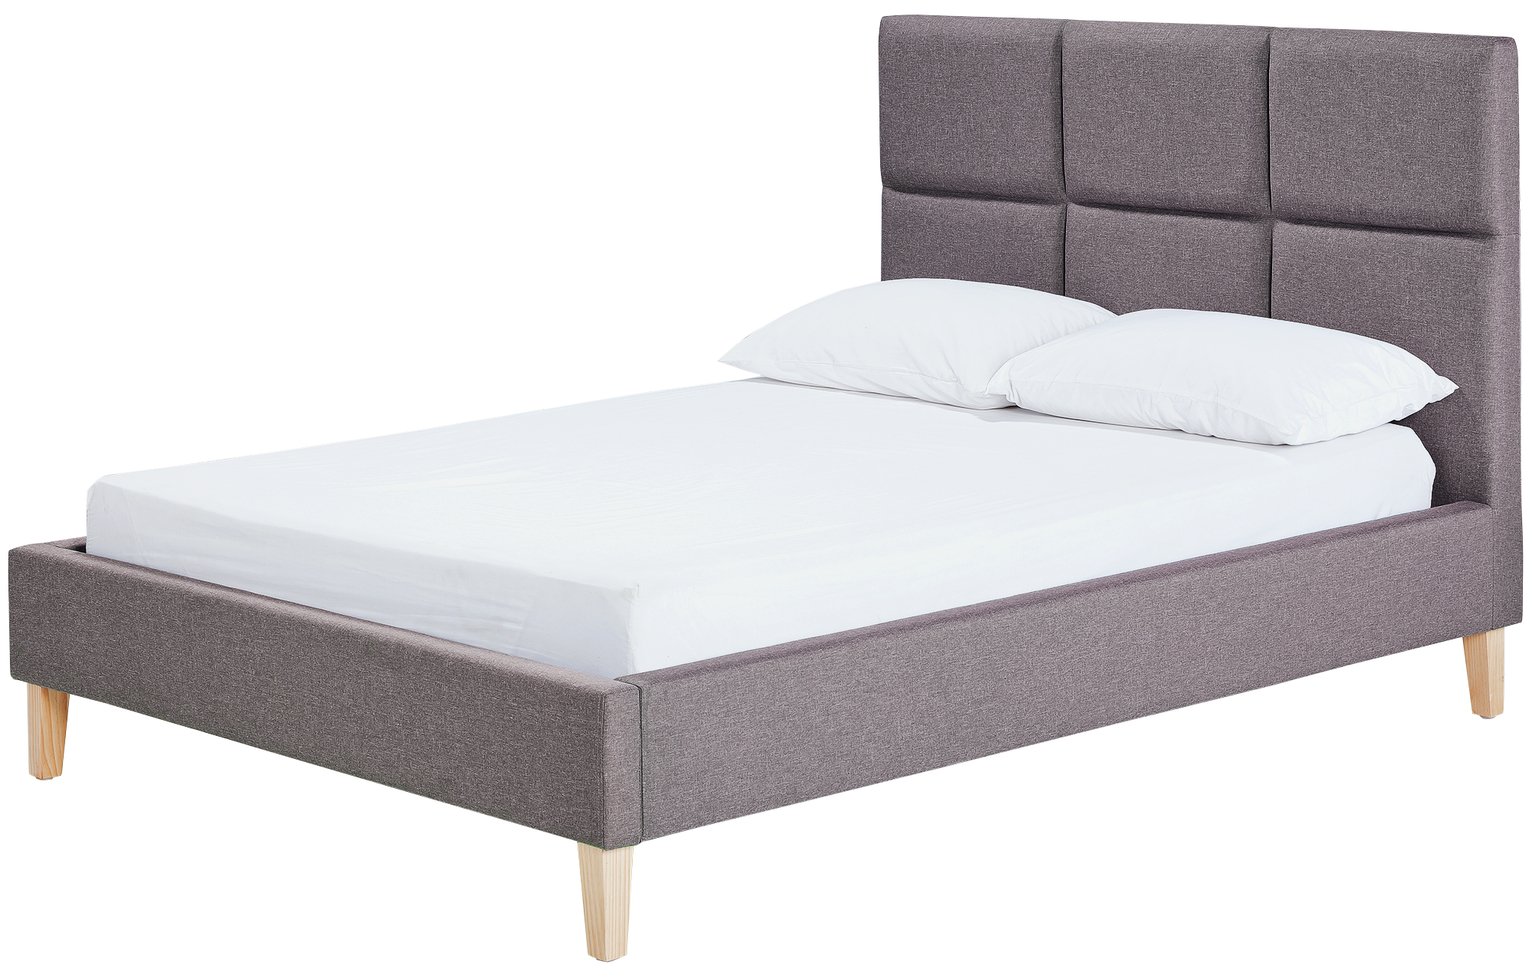 Argos Home Alonso Kingsize Bed Frame - Grey